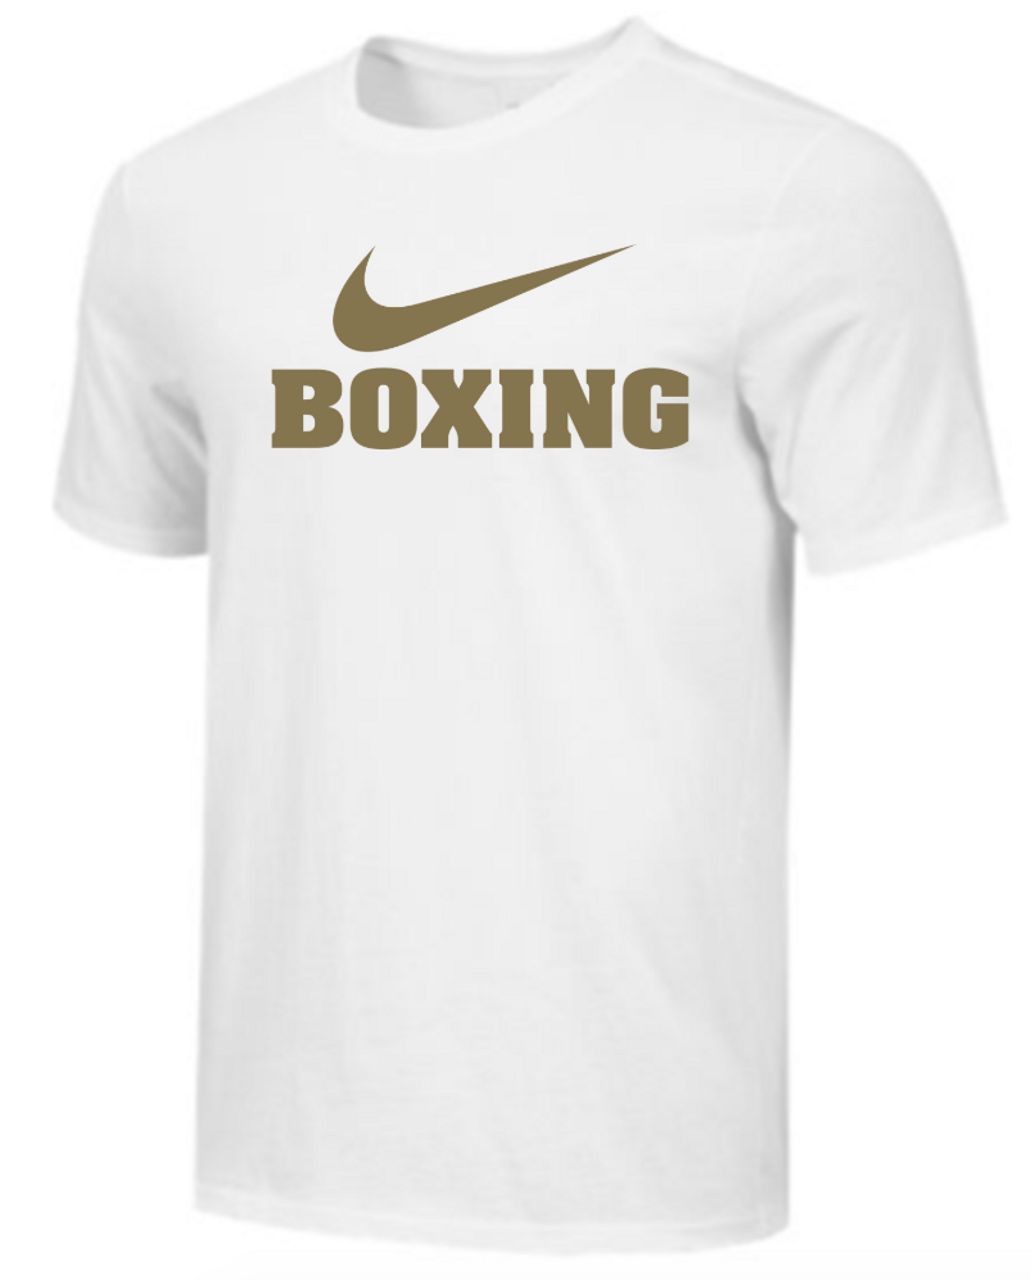 Men's Boxing Tee White/Gold